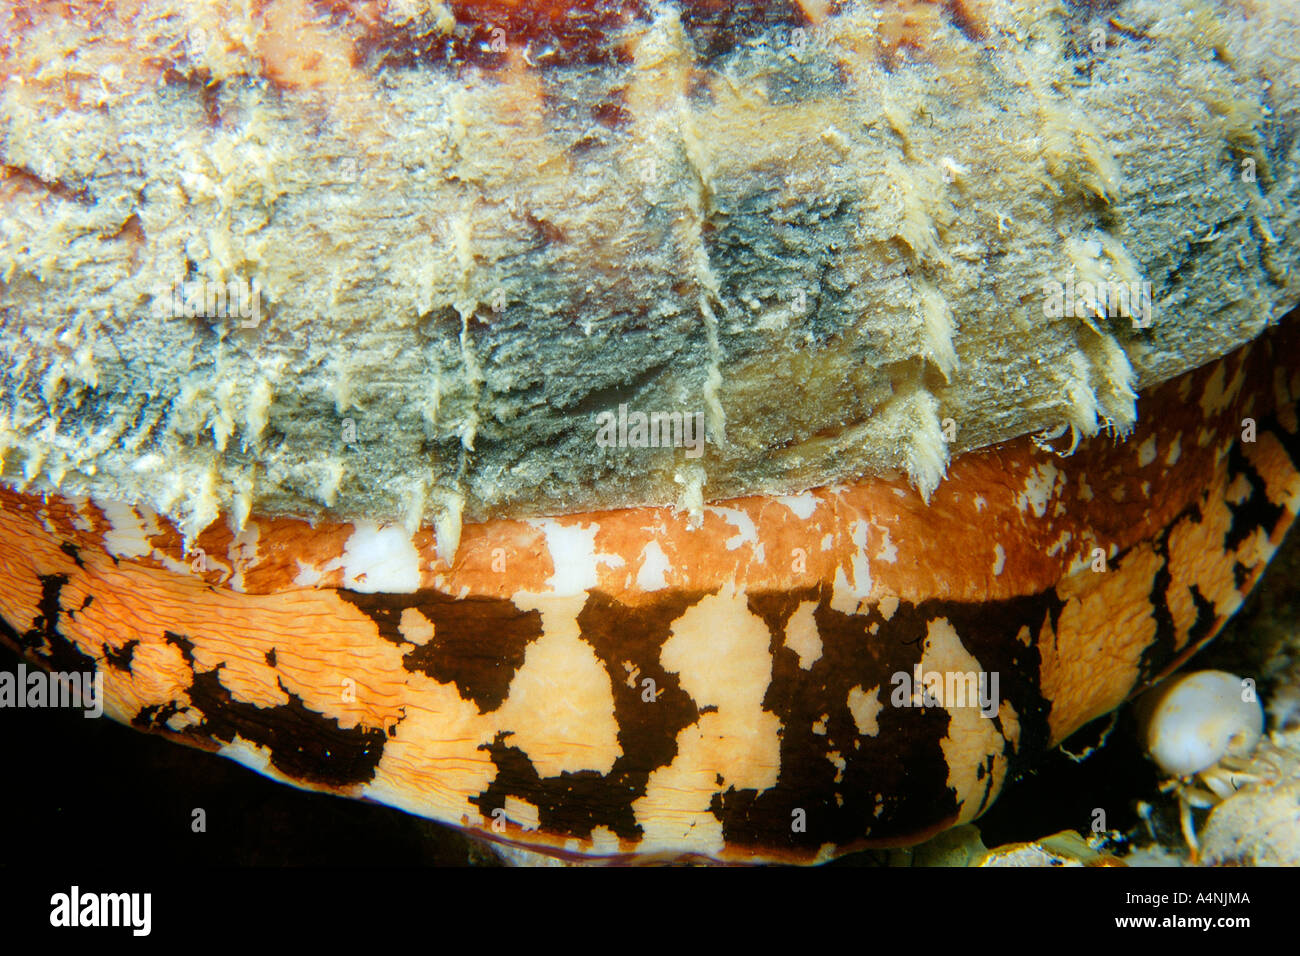 Cone shell Conus geographus mante detail most toxic conus species Short drop off Palau Micronesia Stock Photo